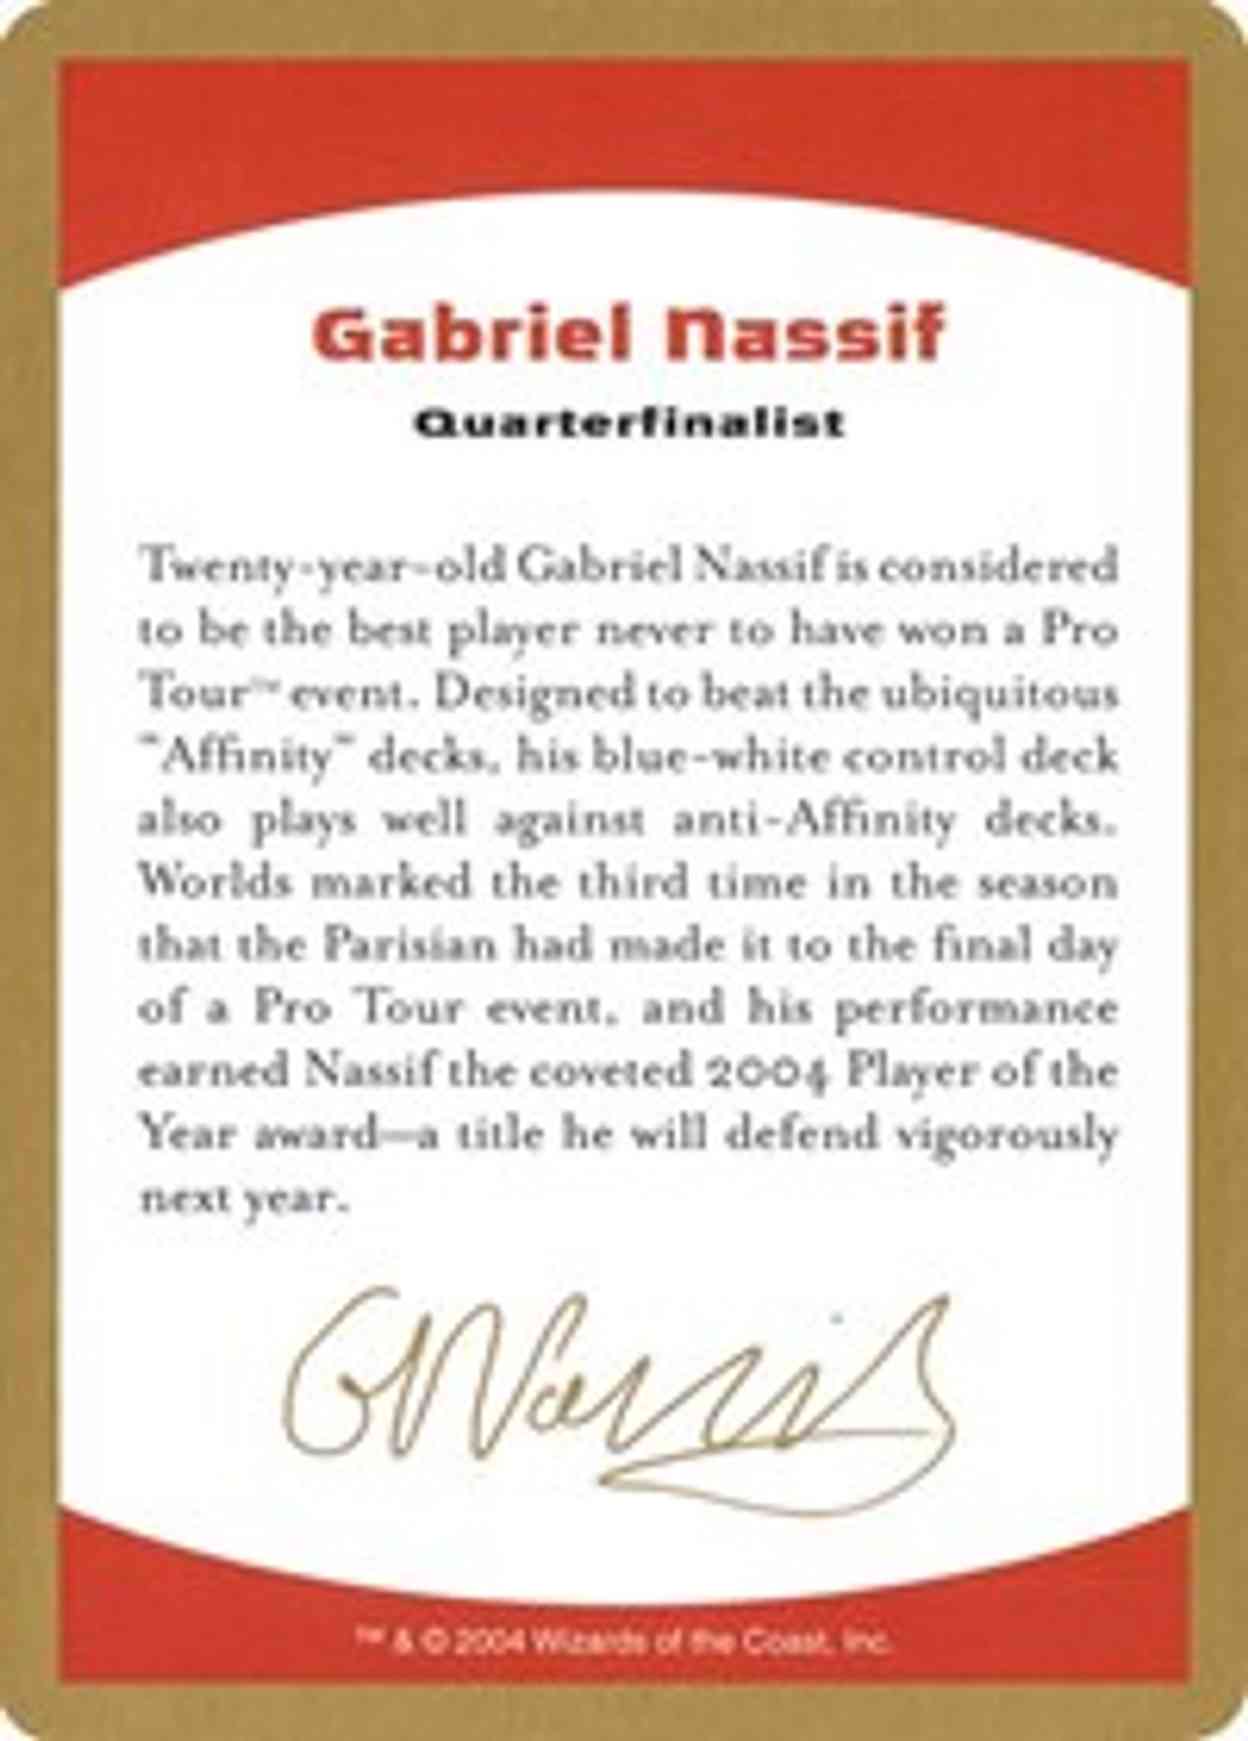 2004 Gabriel Nassif Biography Card magic card front